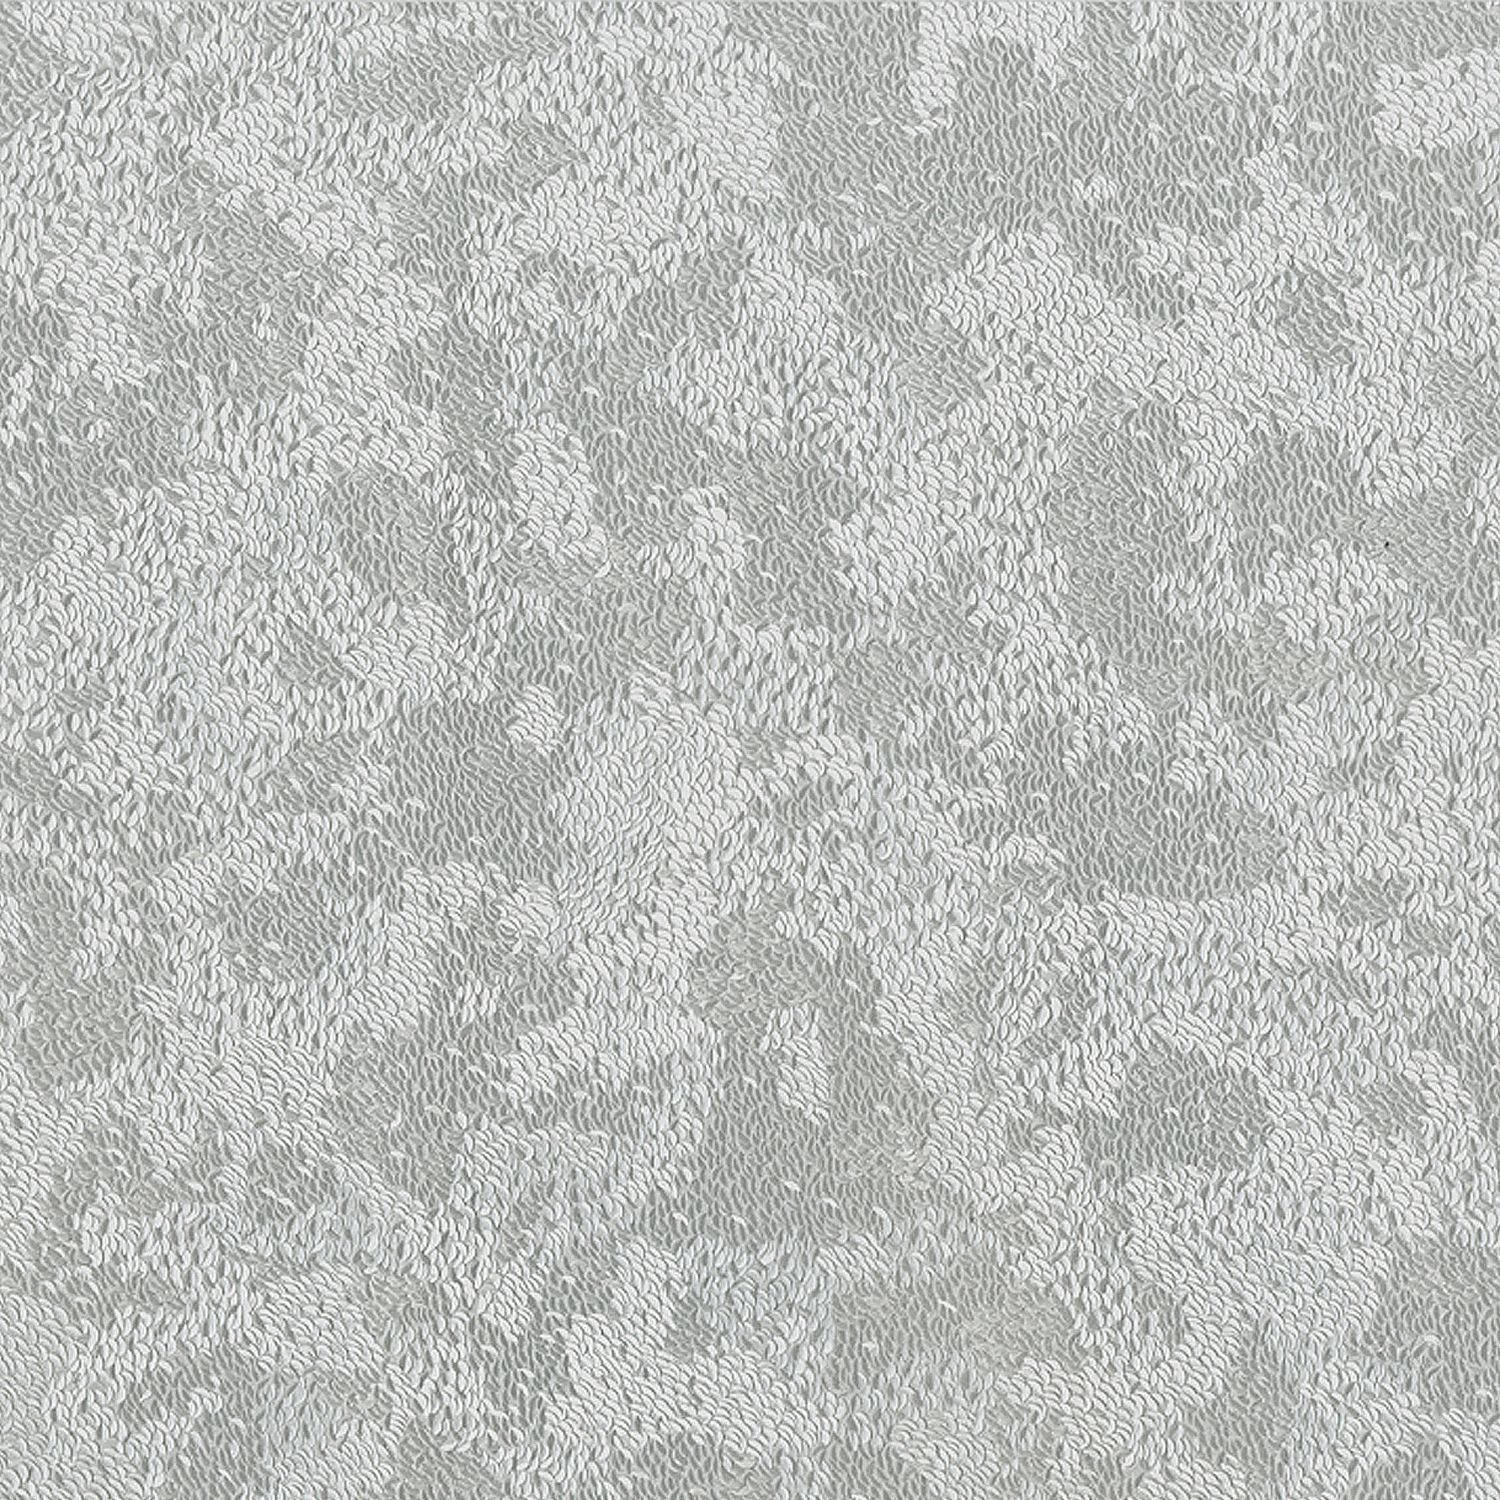 Textured Grey Wall Wallpaper